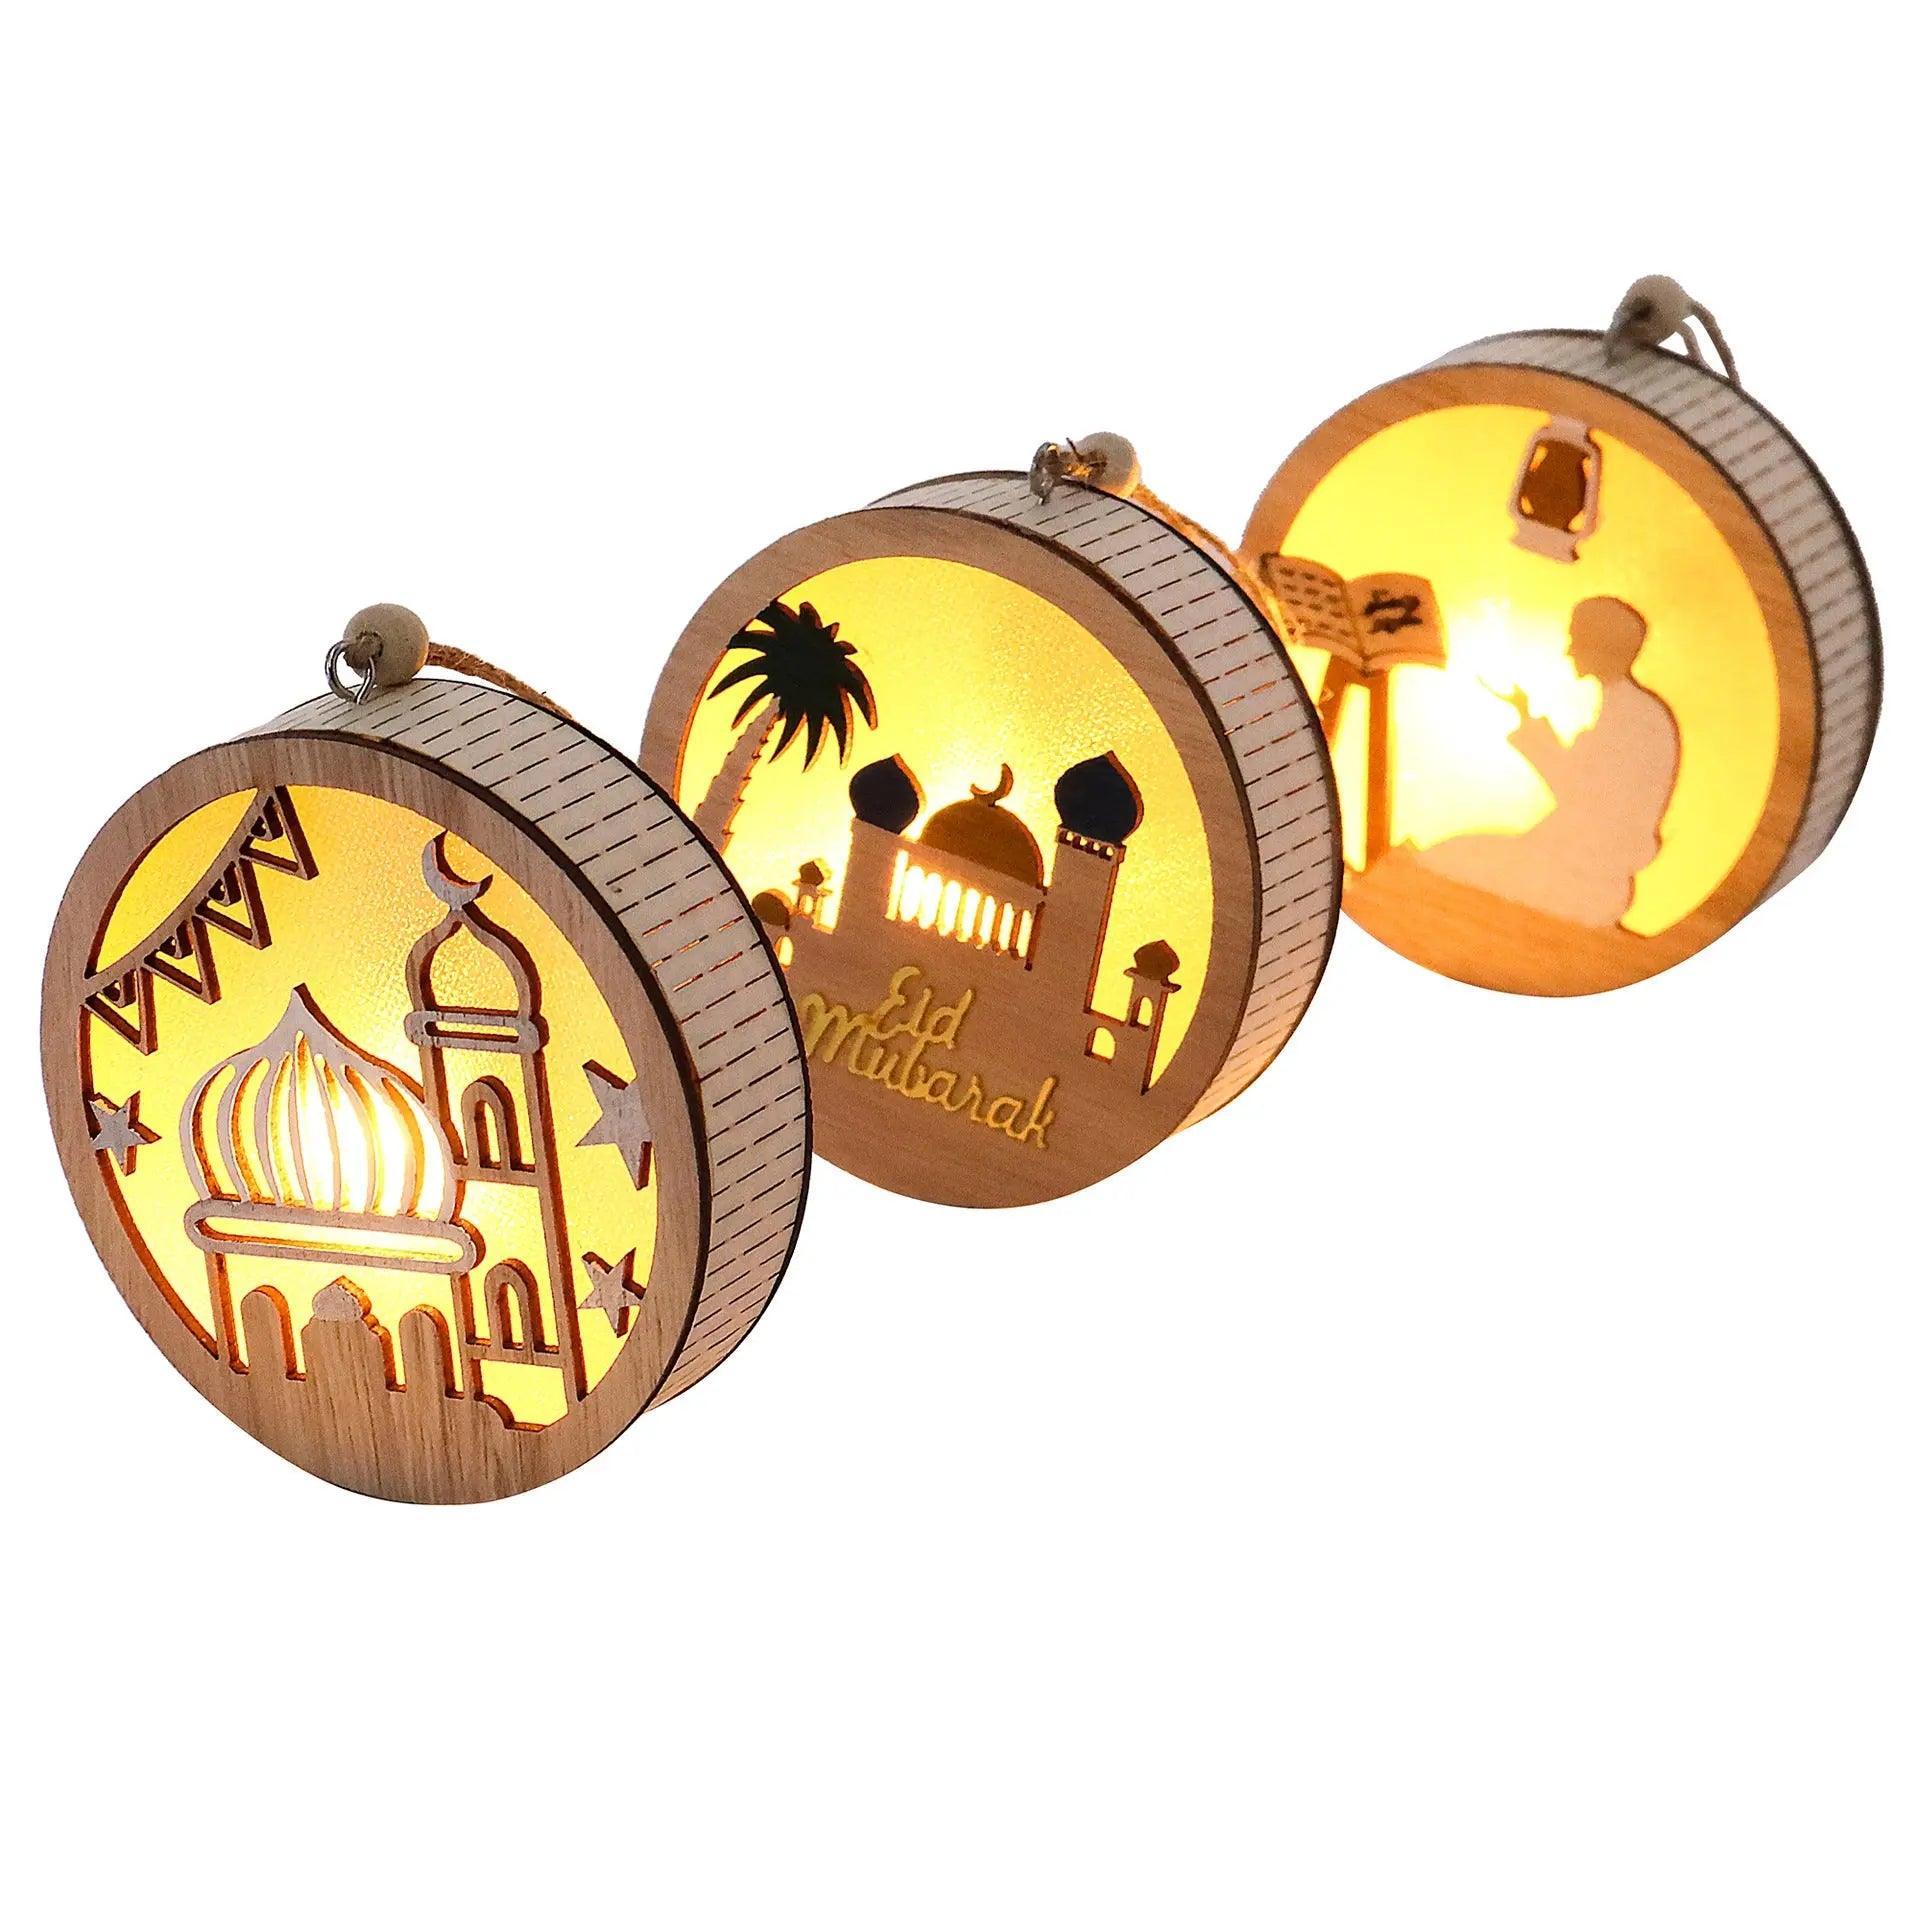 MR036 Eid Mubarak Wooden LED Luminous Pendant - Mariam's Collection